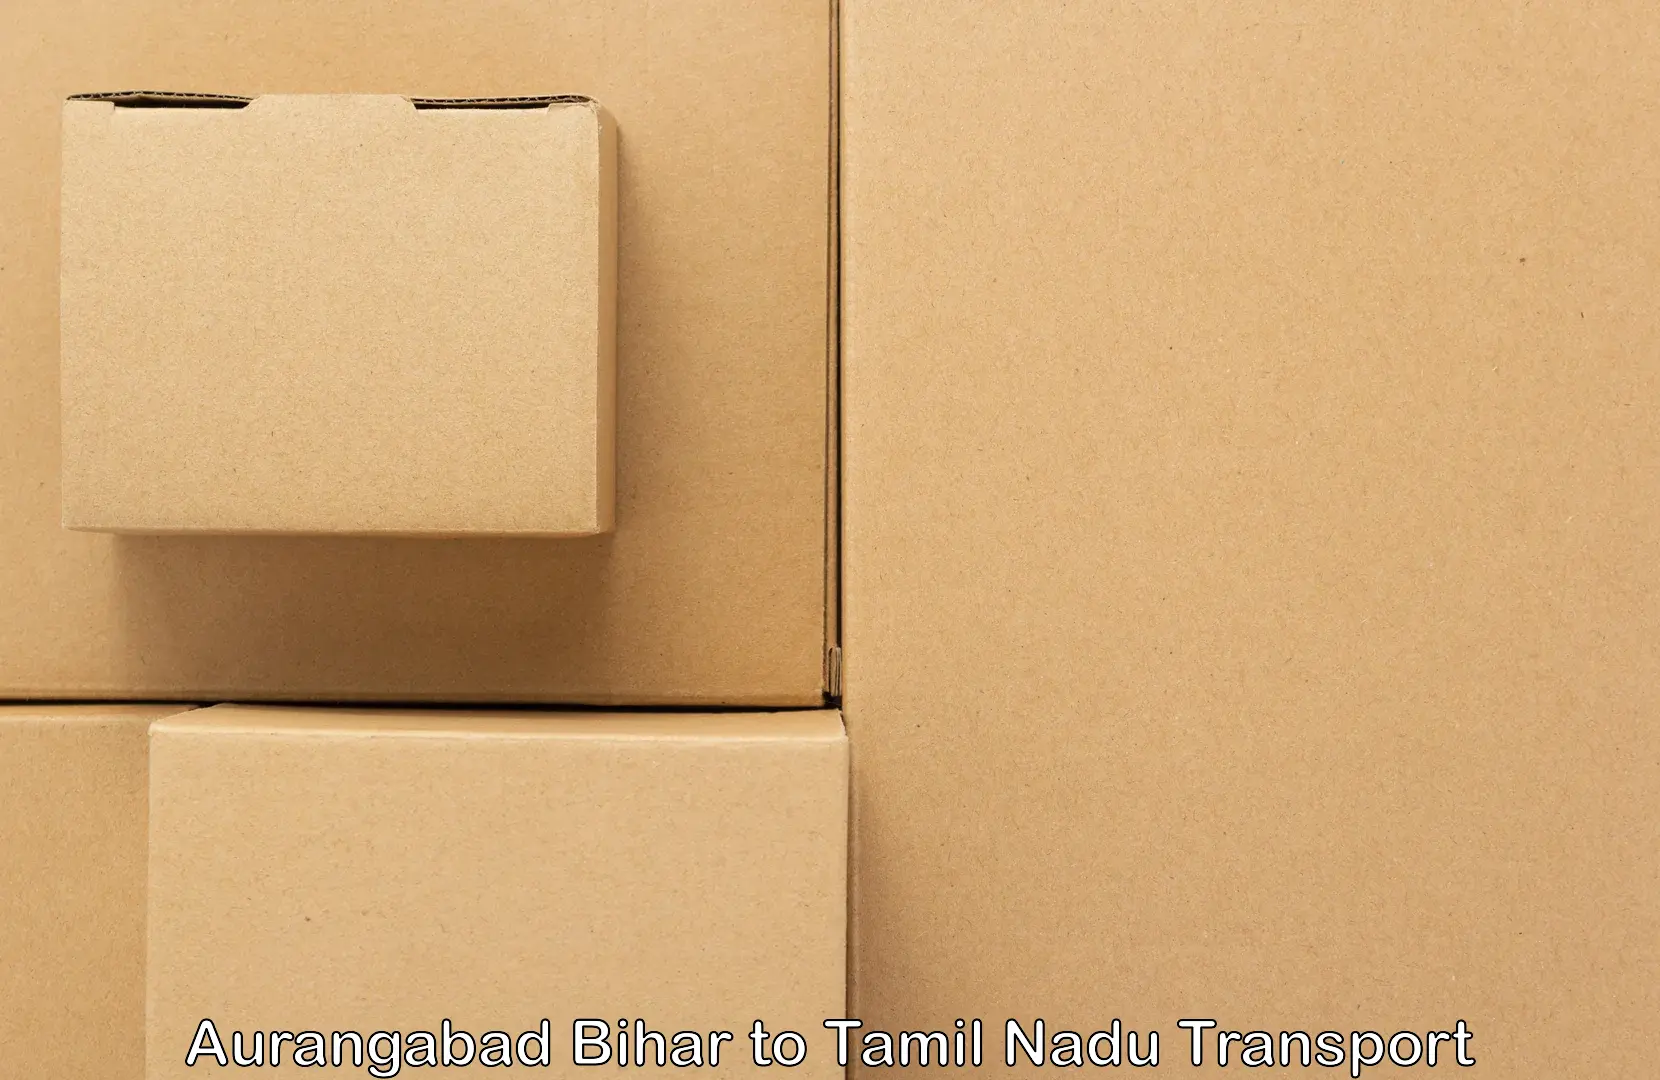 Cargo transportation services Aurangabad Bihar to Karur